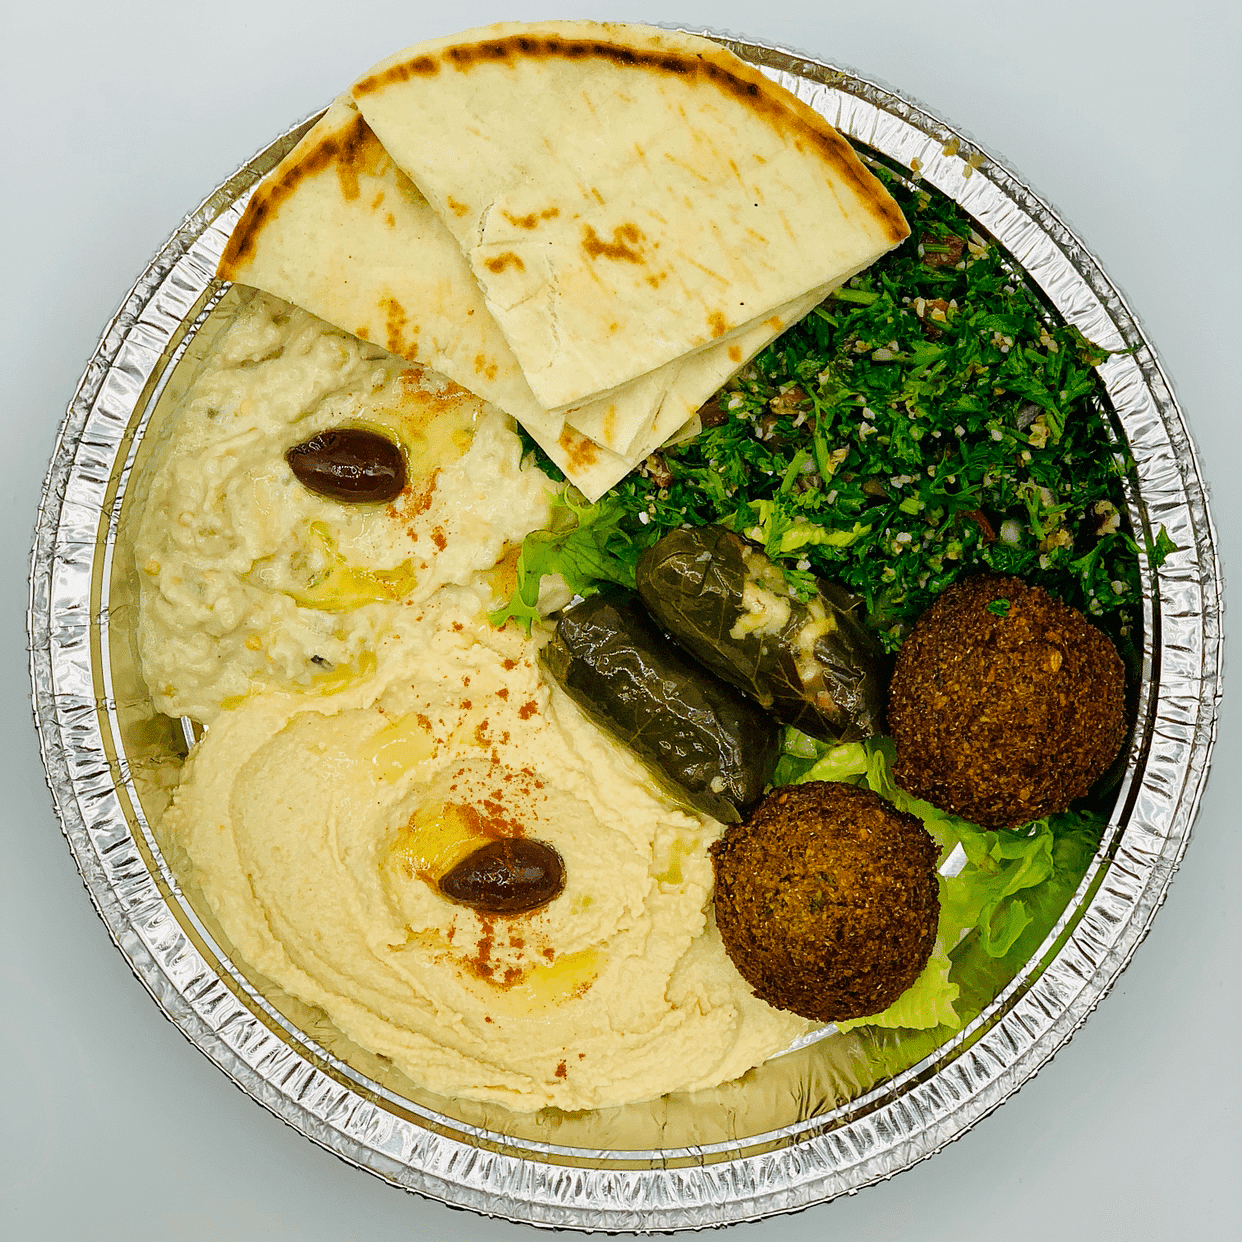 Hummus platter with pita bread, falafel, dolma, and olives